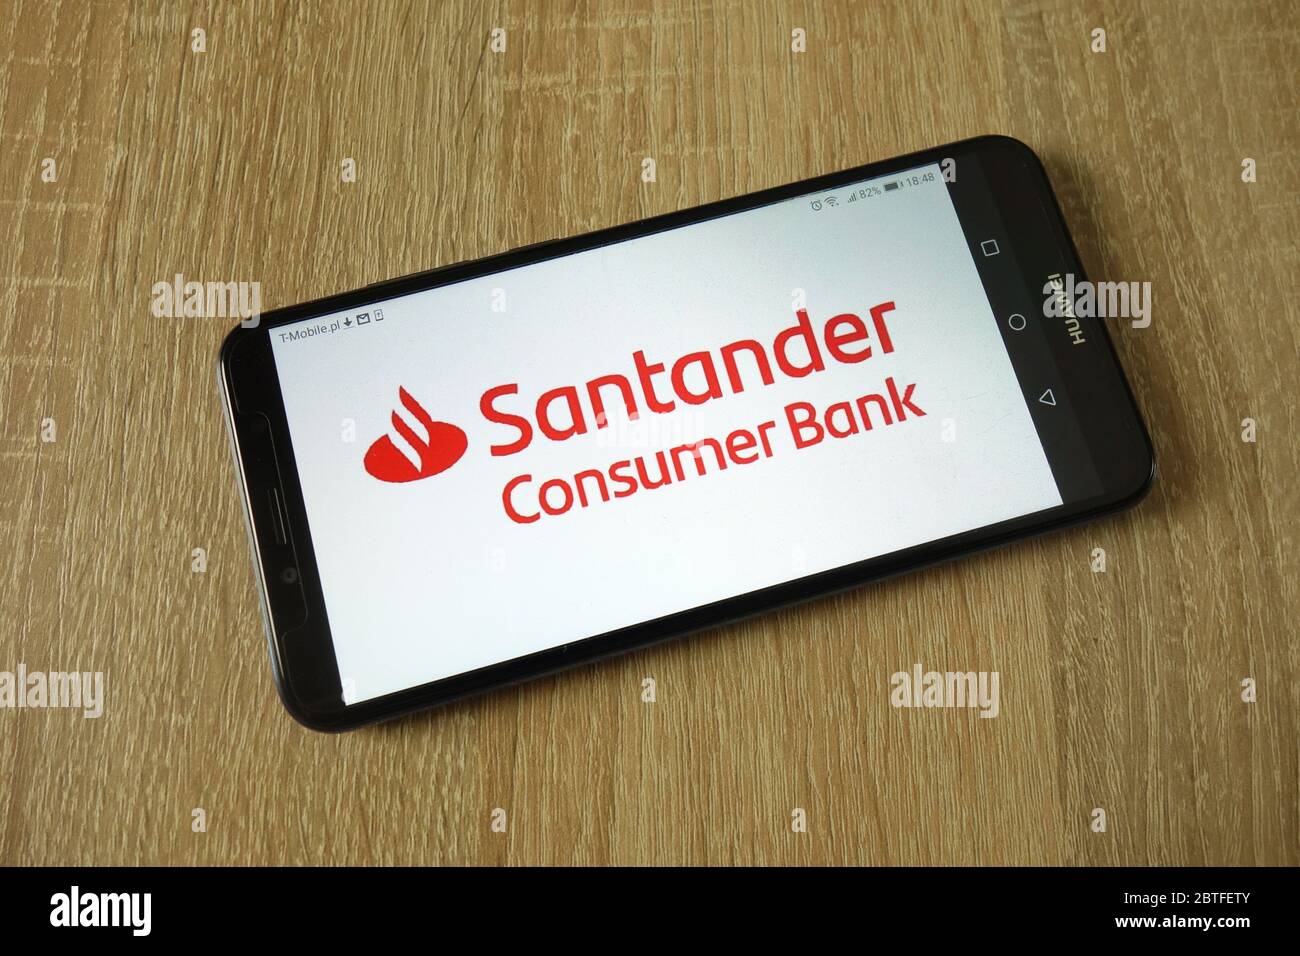 Santander Consumer Bank logo displayed on smartphone Stock Photo